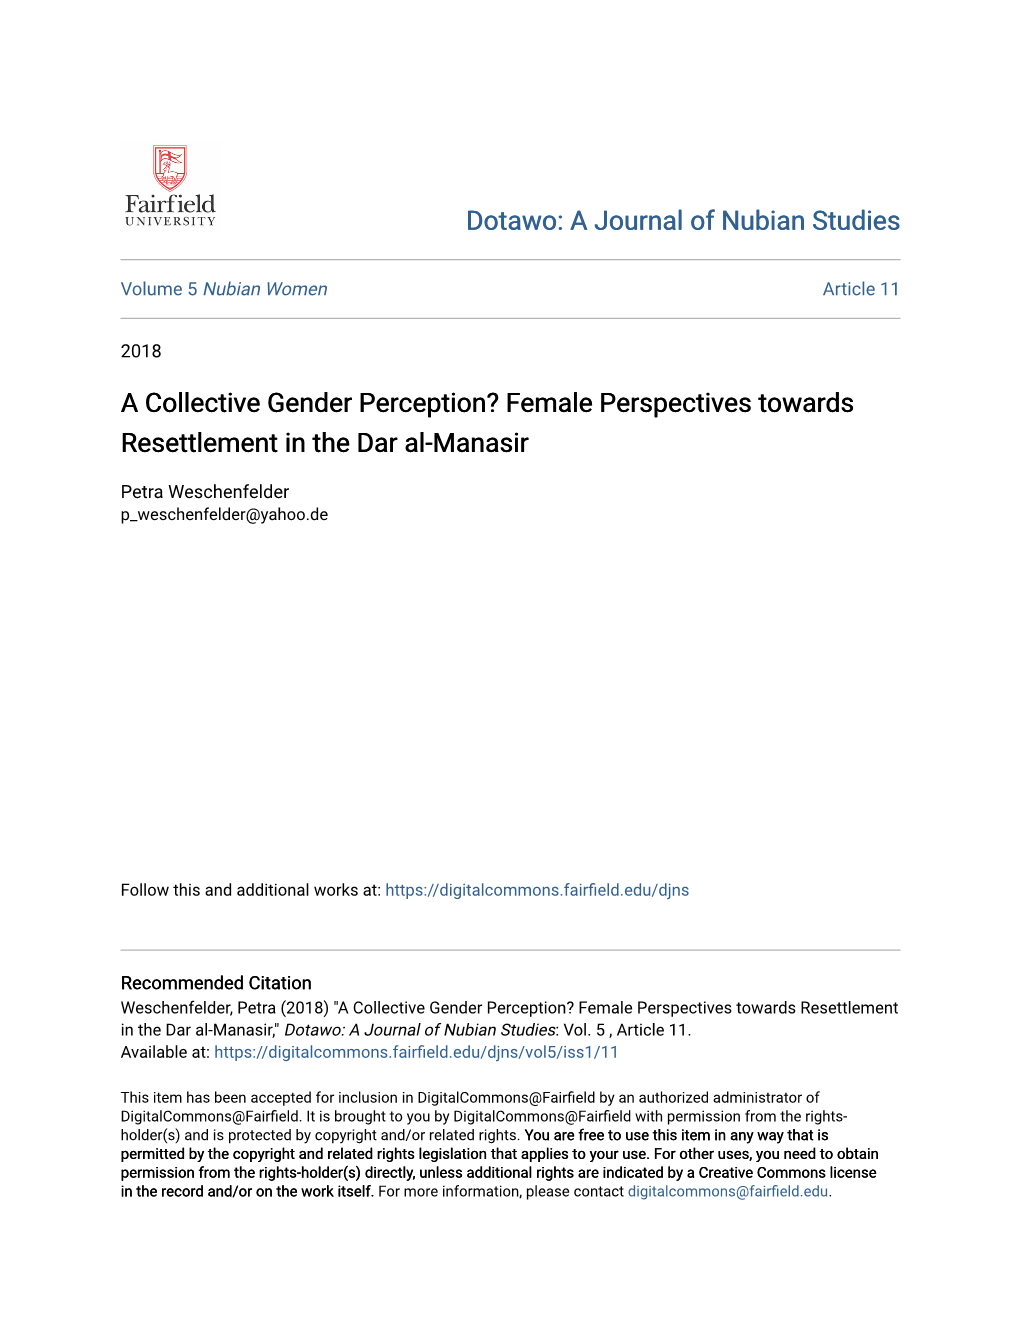 Female Perspectives Towards Resettlement in the Dar Al-Manasir